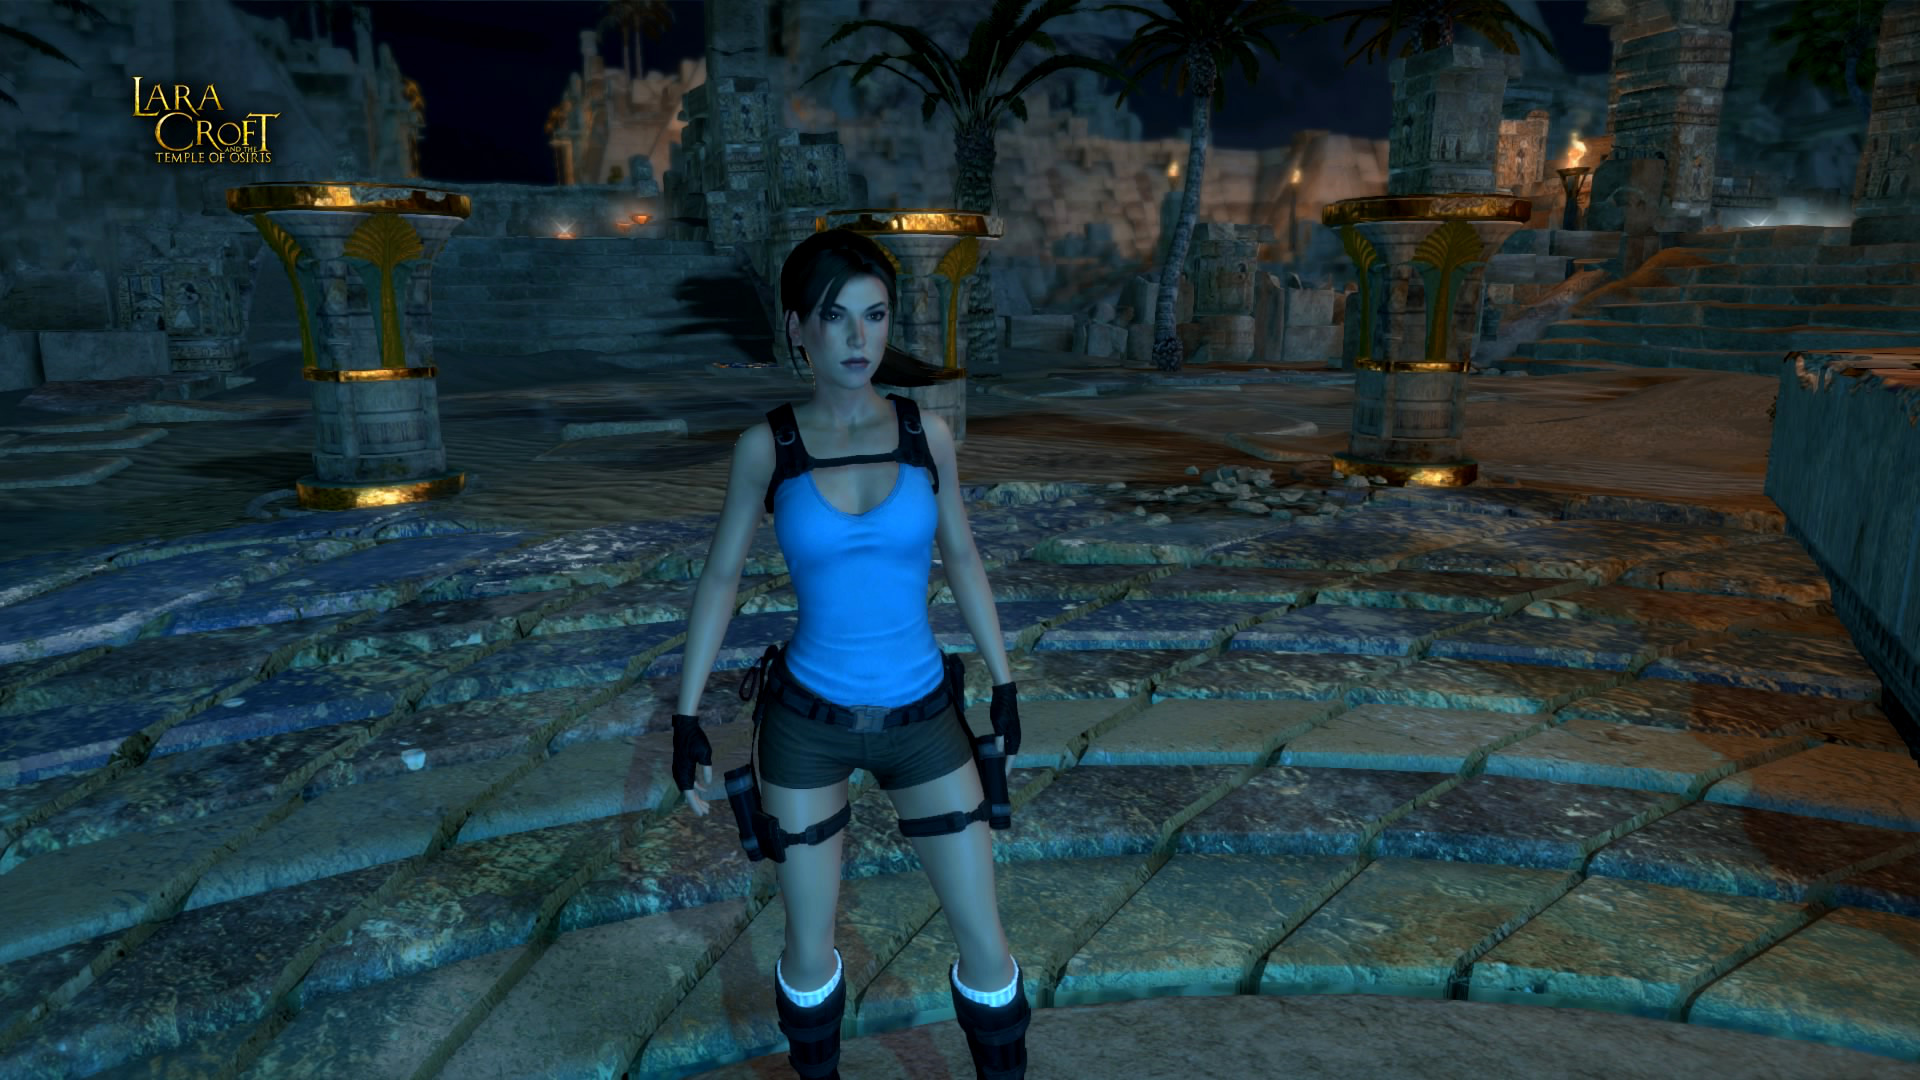 Lara Croft And The Temple Of Osiris HD wallpapers, Desktop wallpaper - most viewed